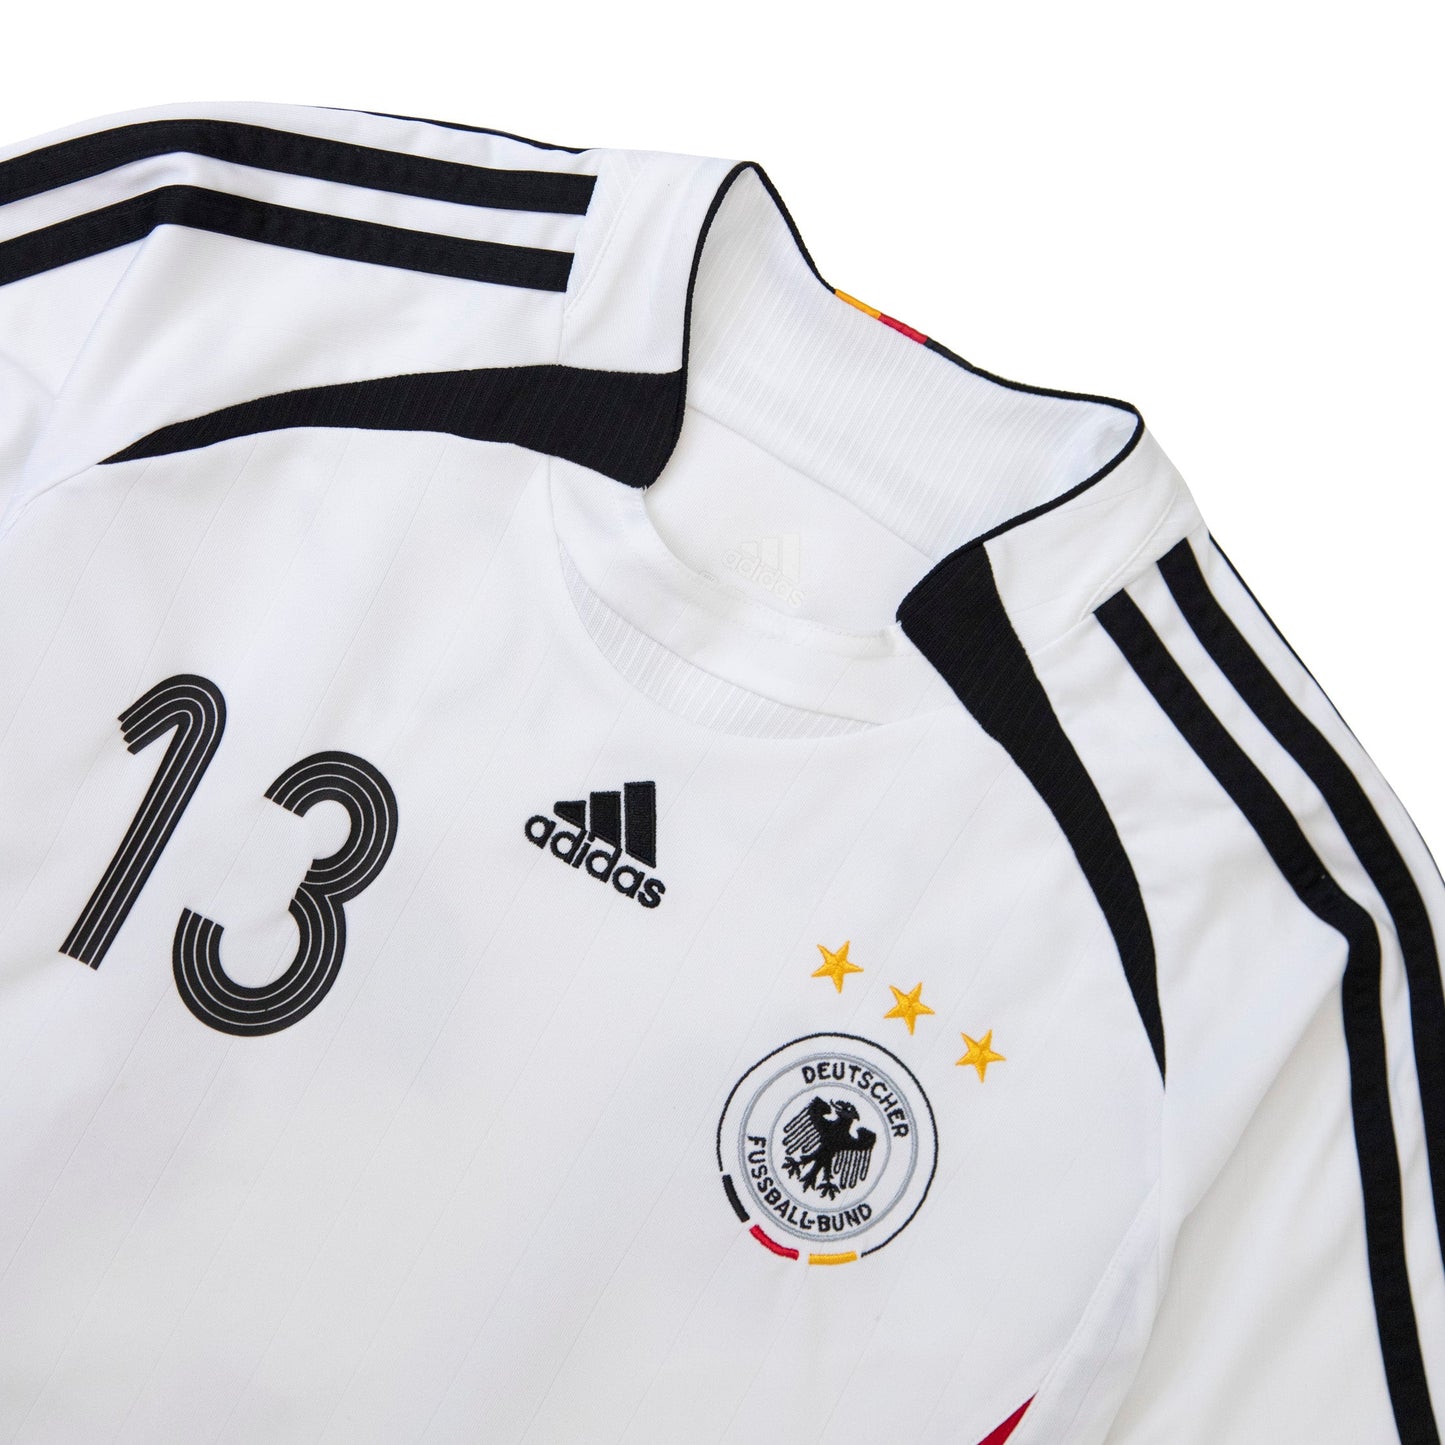 2005/07 Germany x Adidas 'Ballack 13' Home Football Shirt